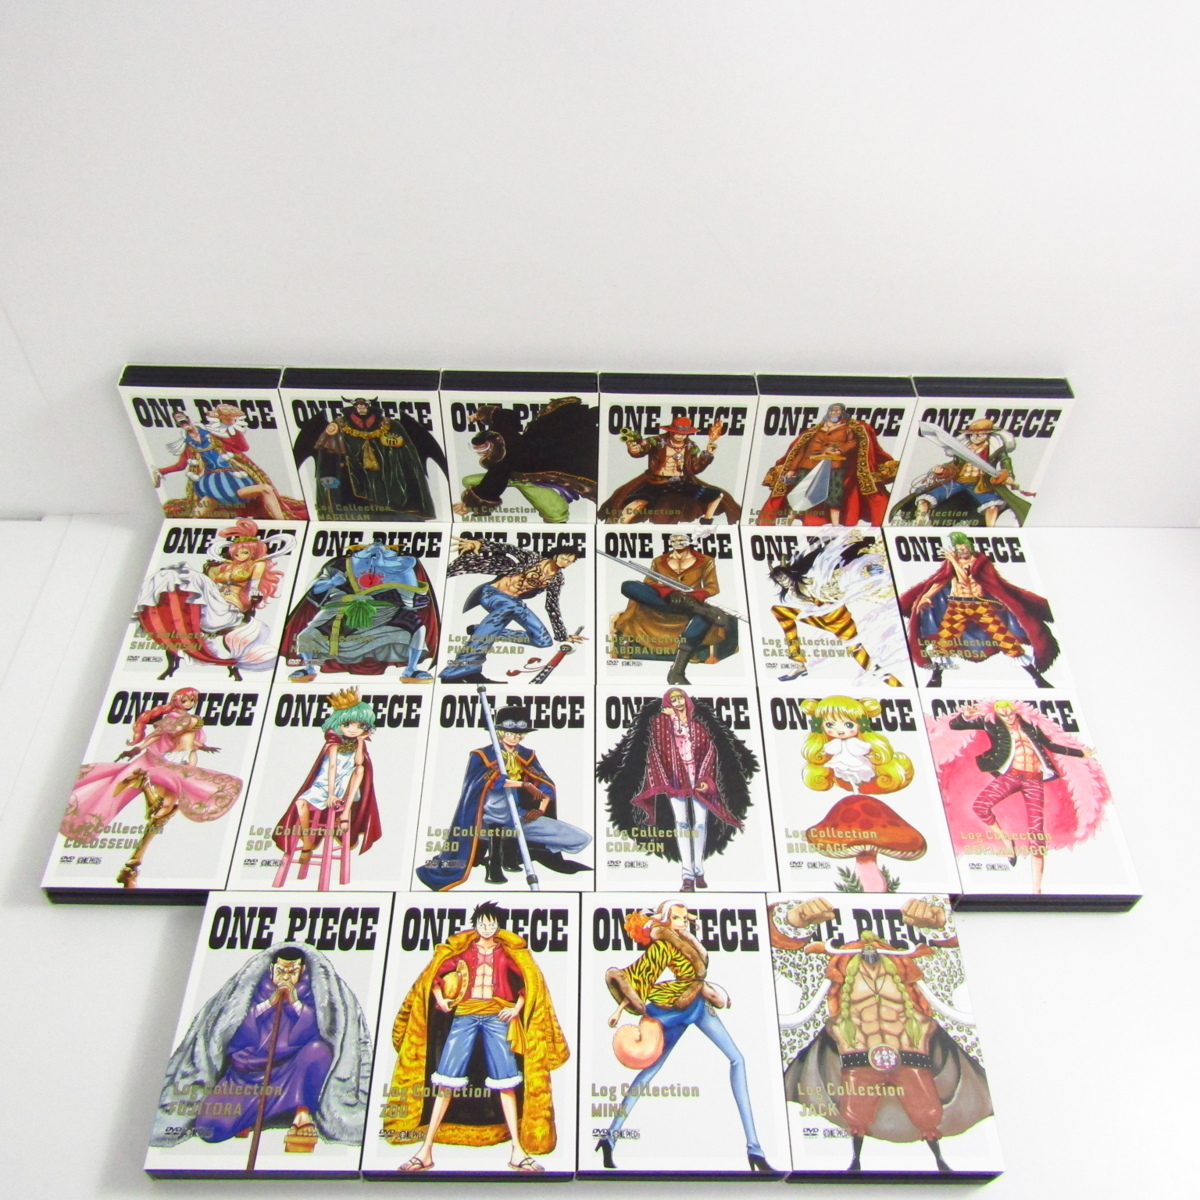 One Piece ワンピース Log Collection Dvd 46巻 まとめセット A5514 わ行 売買されたオークション情報 Yahooの商品情報をアーカイブ公開 オークファン Aucfan Com